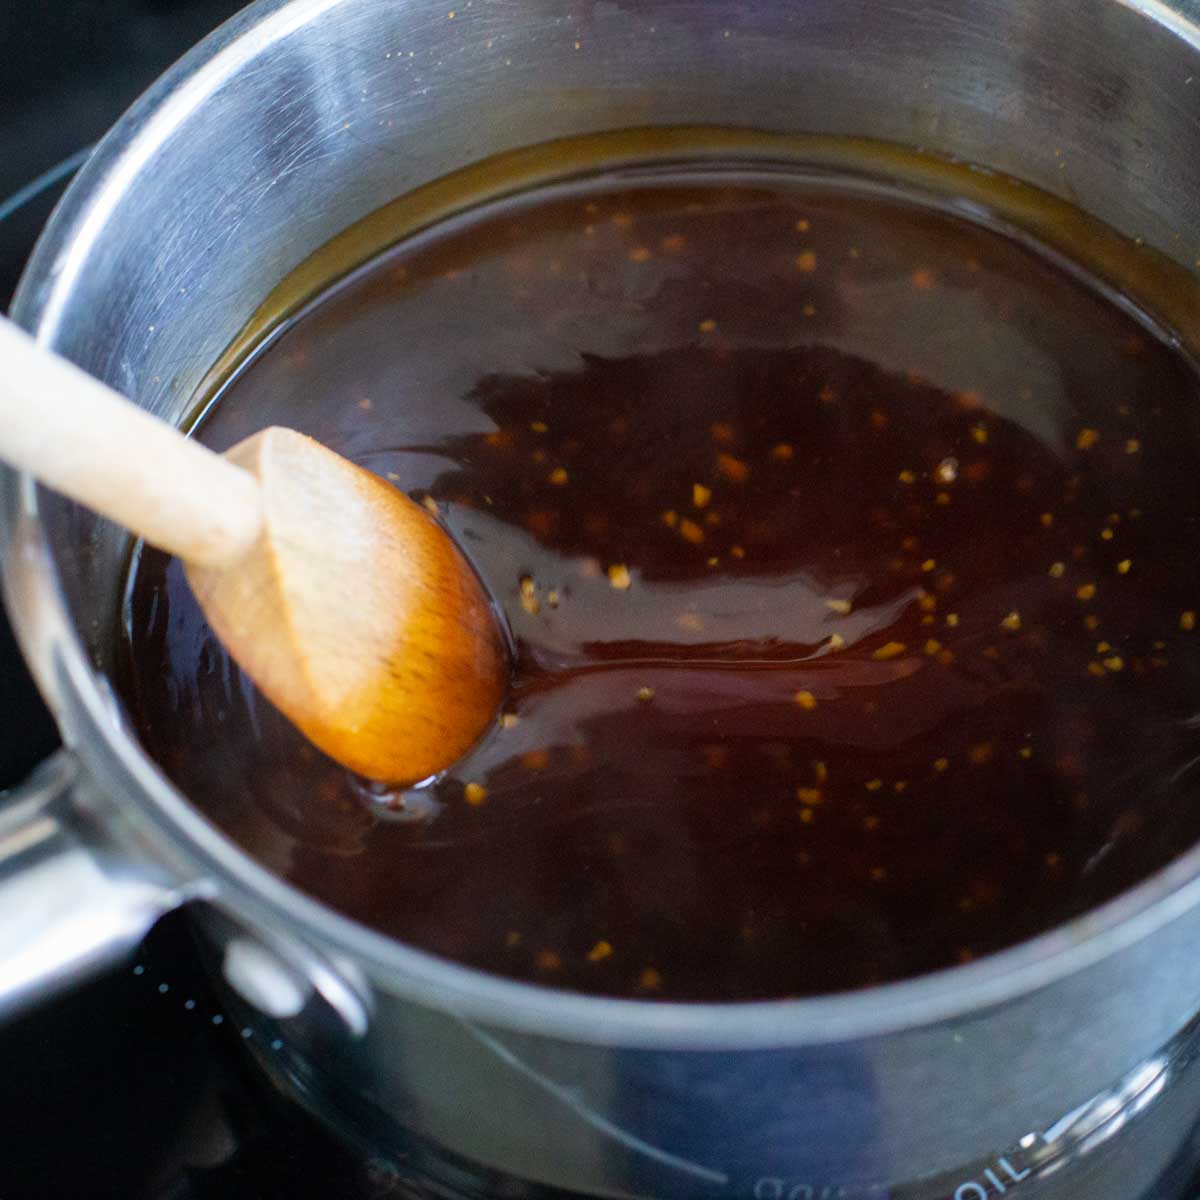 A pot of warm homemade teriyaki sauce is on the stove top.